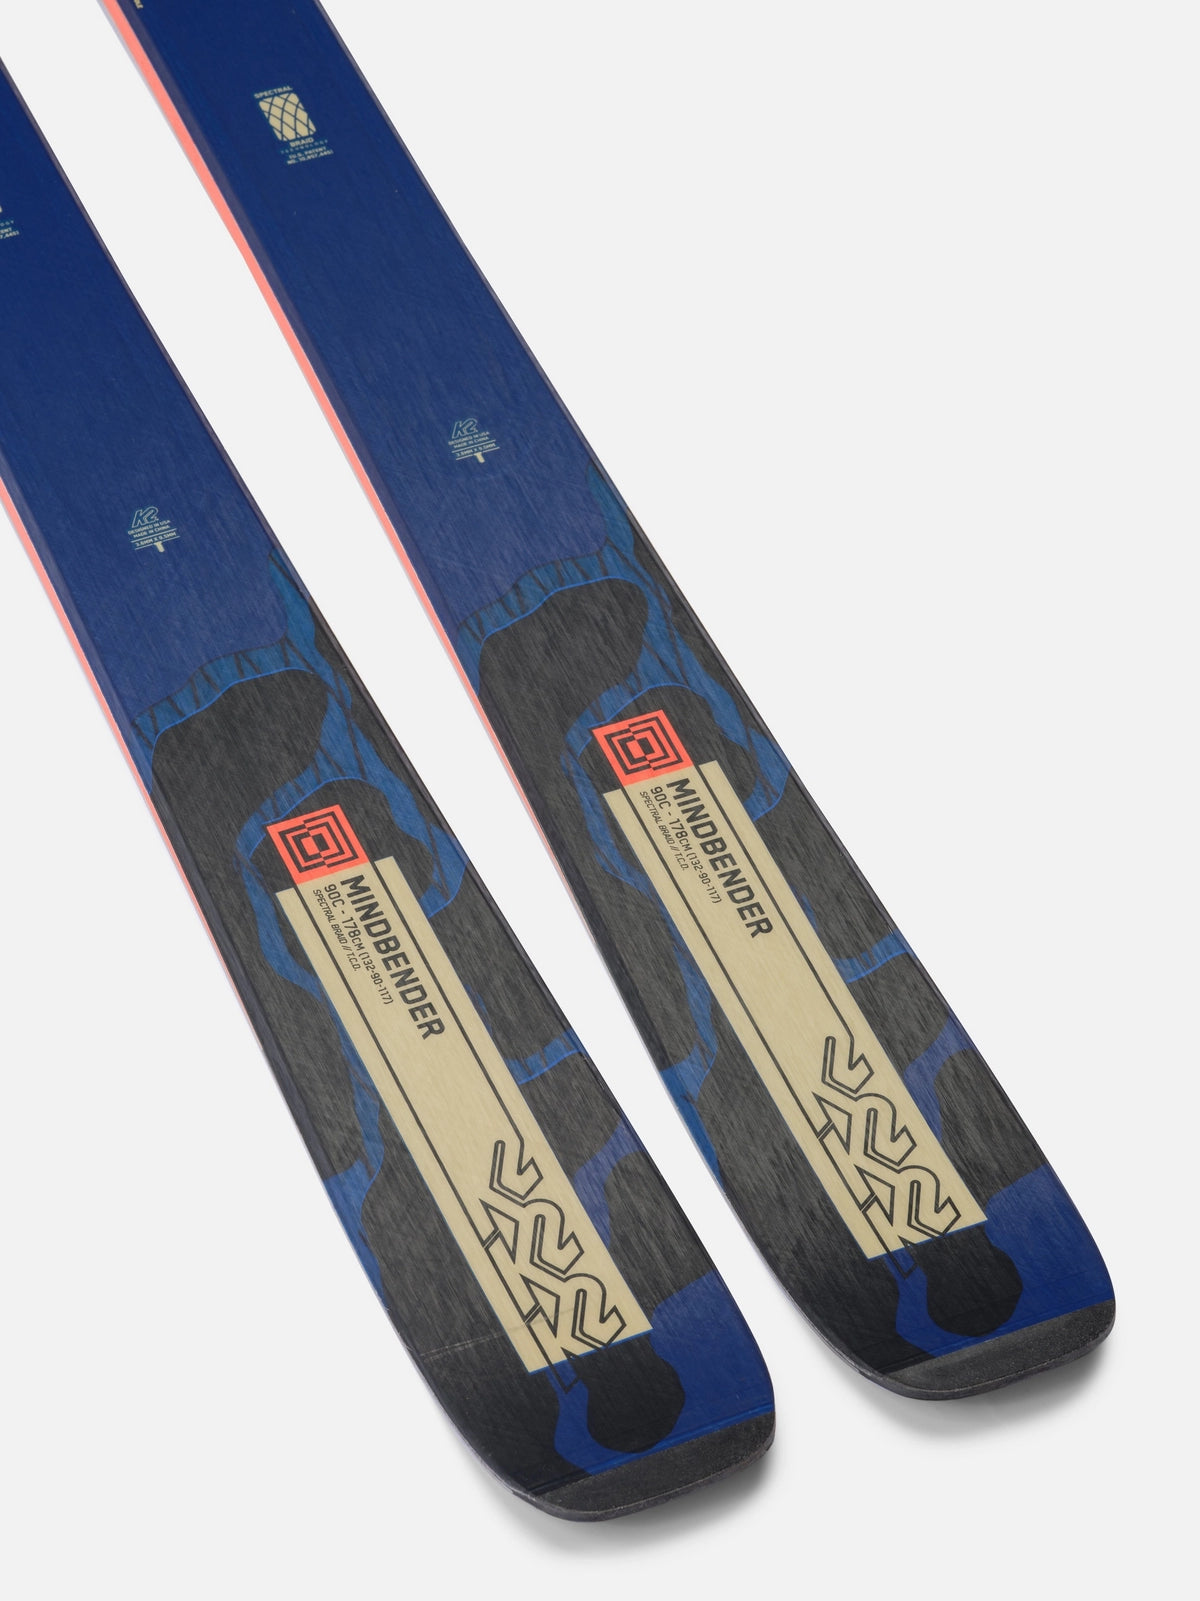 K2 Mindbender 90 C Skis (2024)